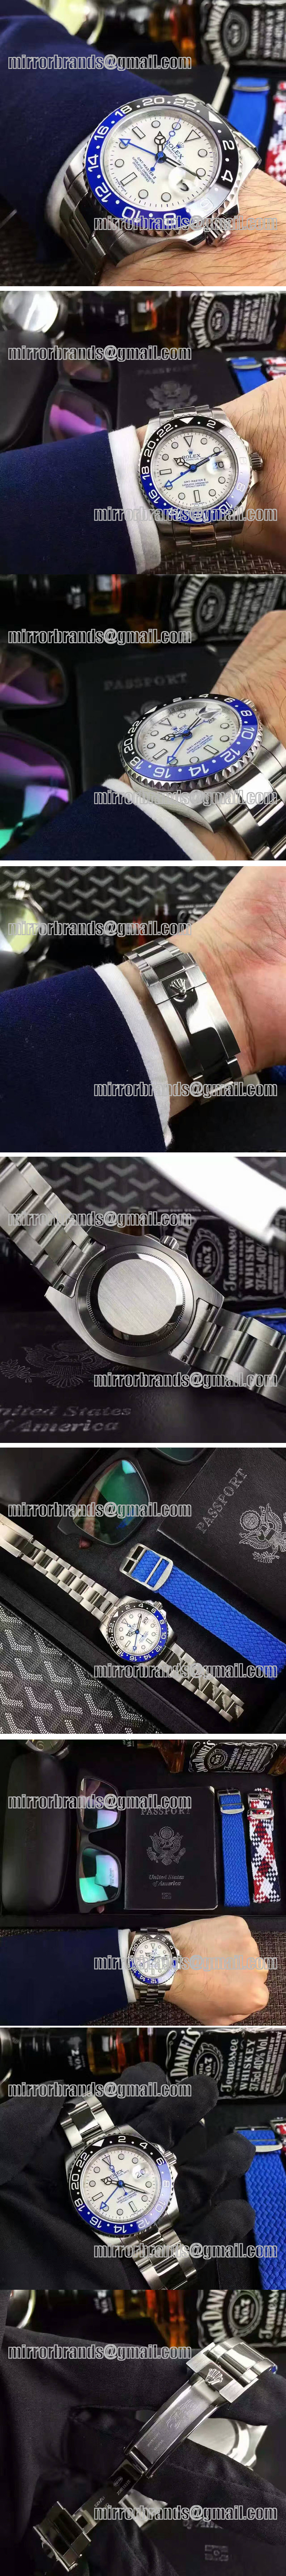 Replica Rolex GMT II Watches